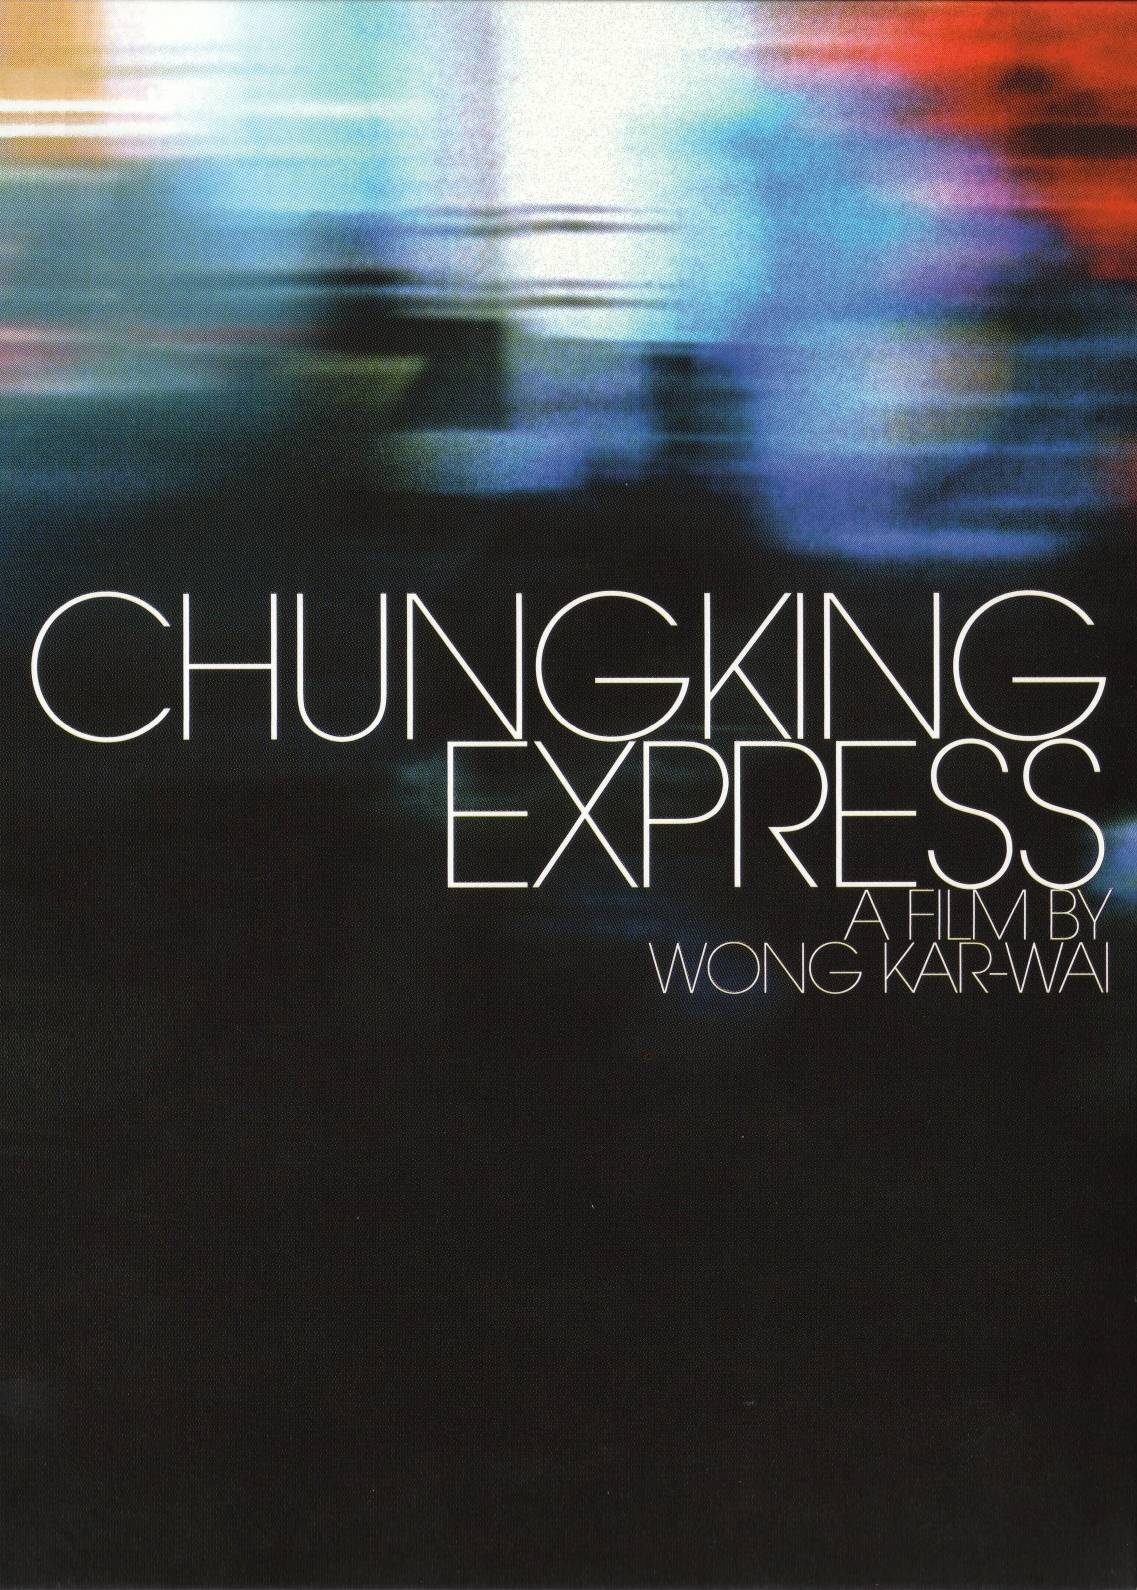 Chungking express explained | huysulzpostcar1989's Ownd